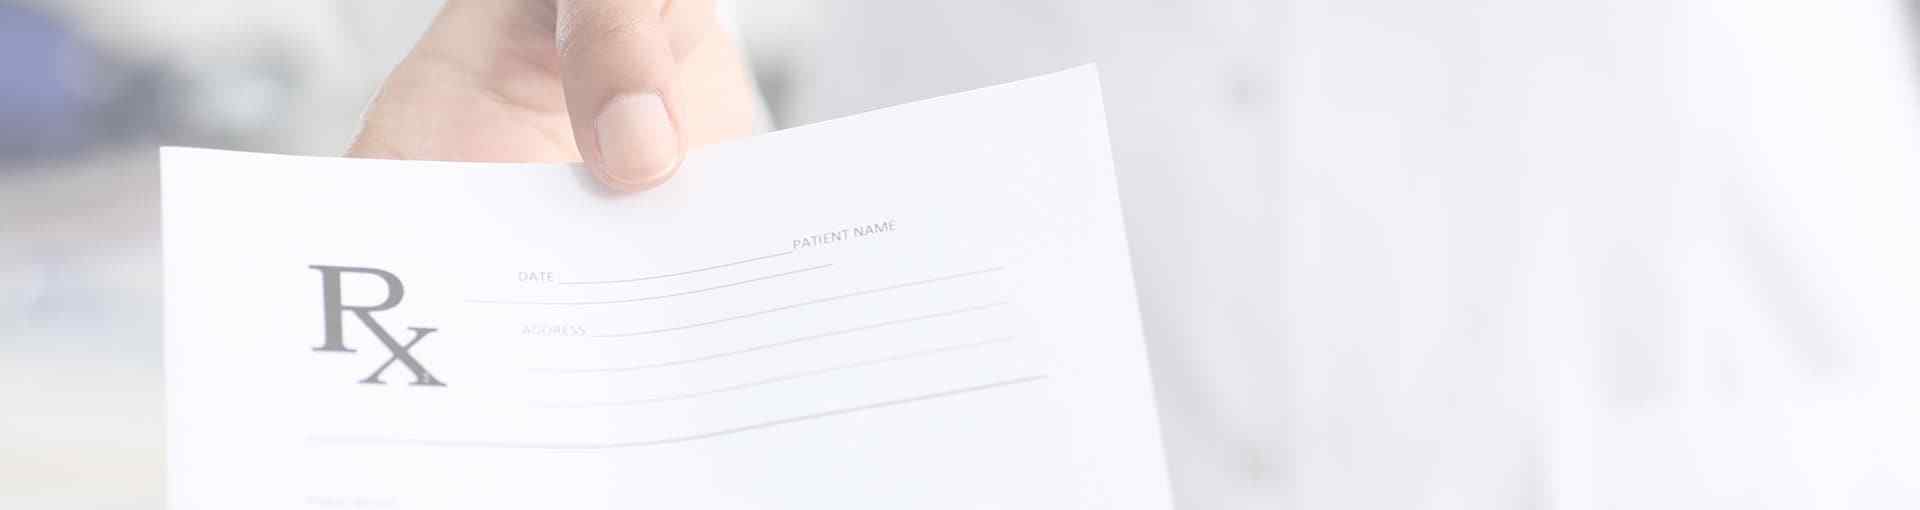 Prescription Forms at Harbor Compounding Pharmacy